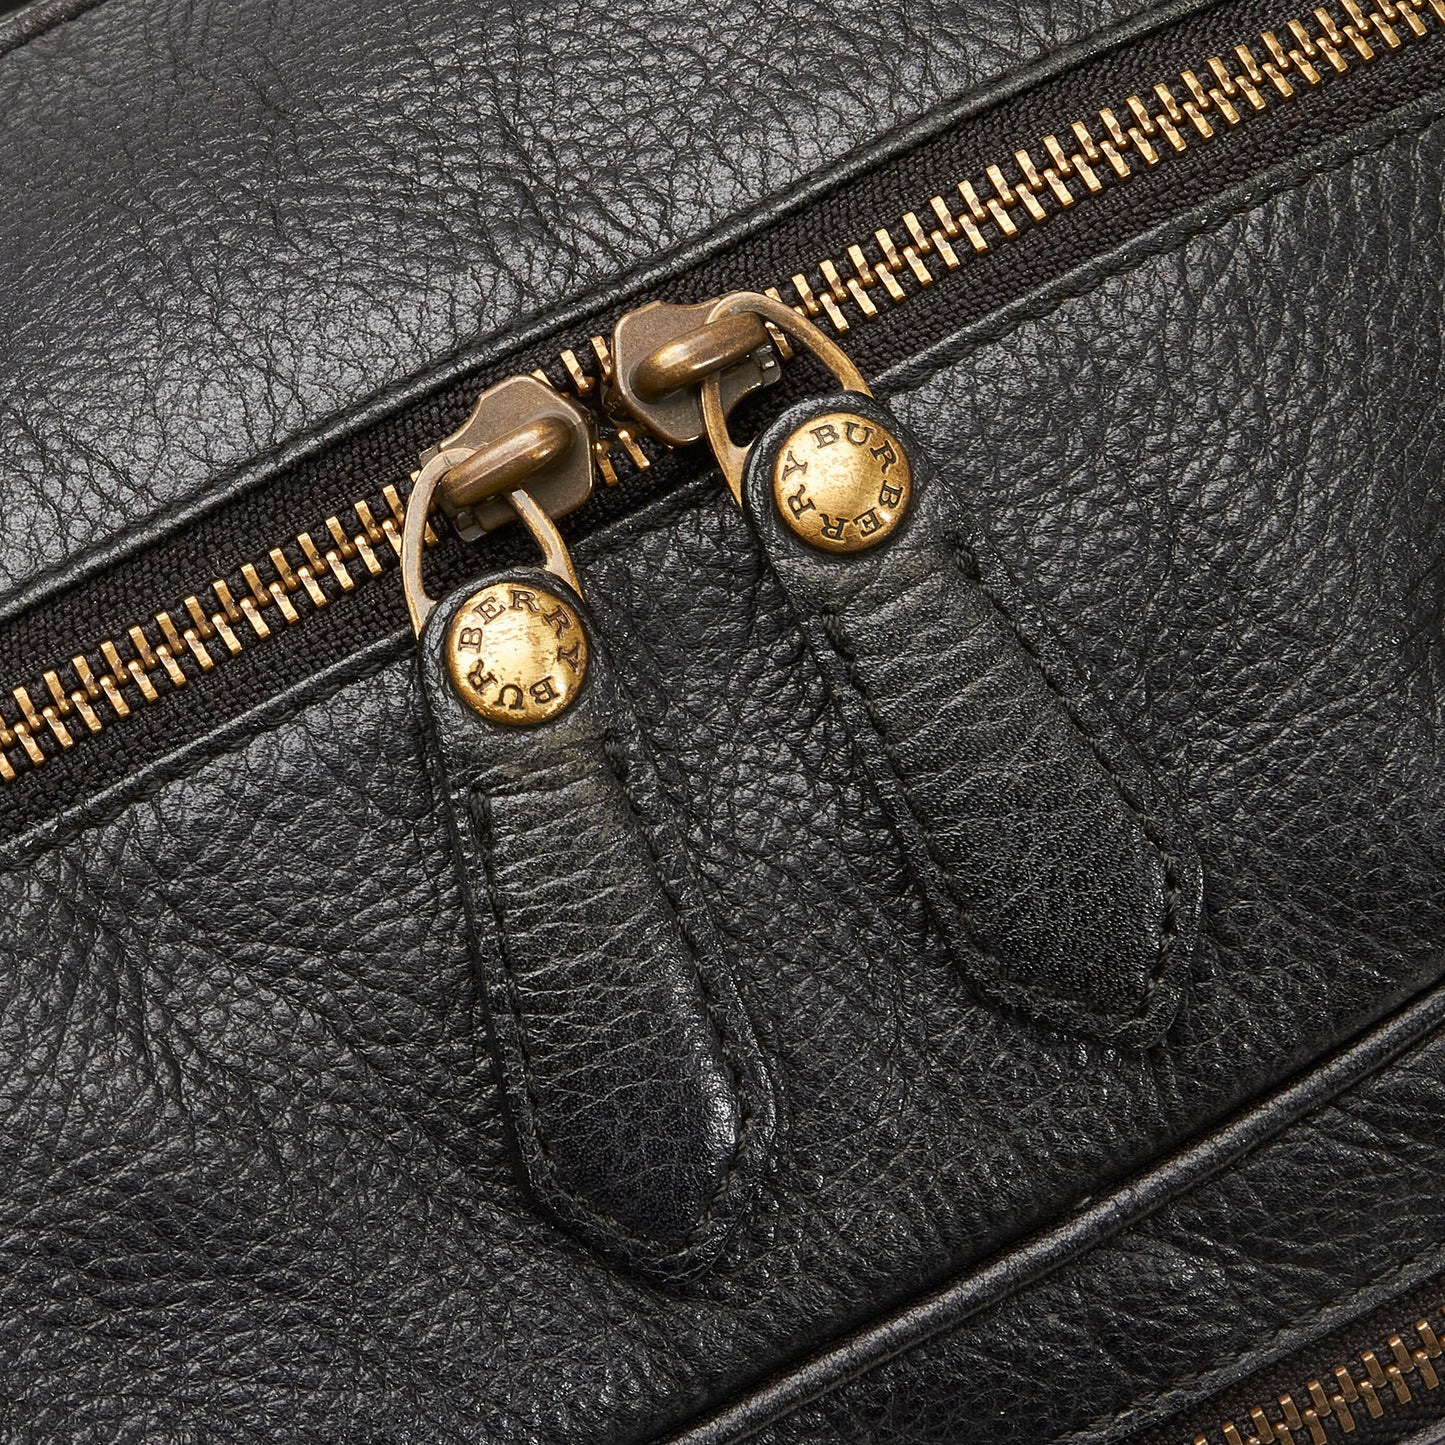 Calf Leather Travel Bag